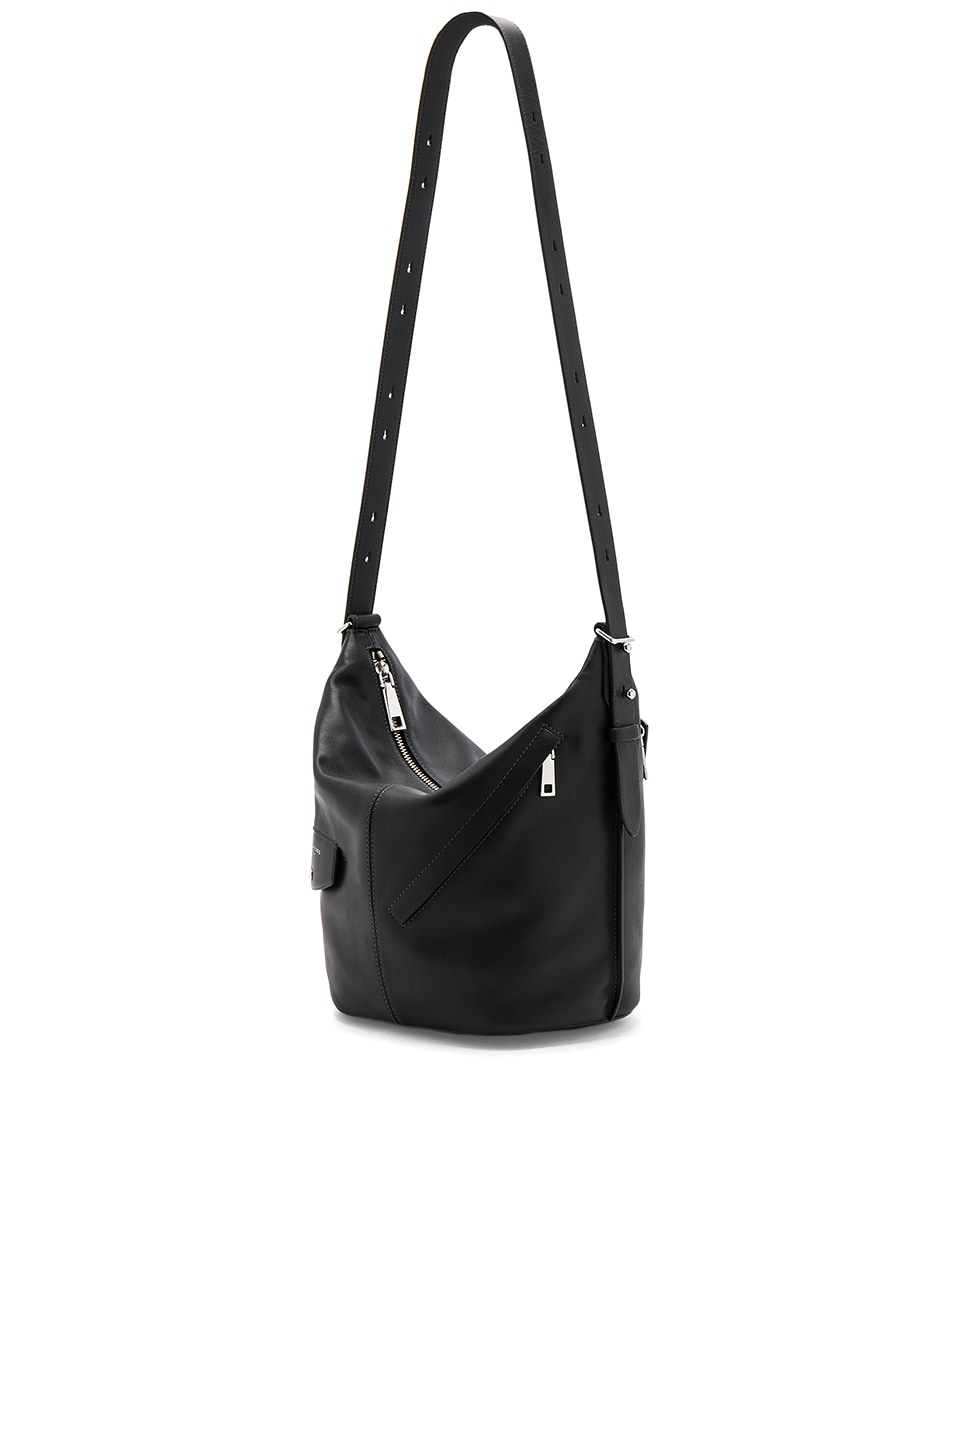 MARC JACOBS The Sling Convertible Shoulder Bag in Black | ModeSens